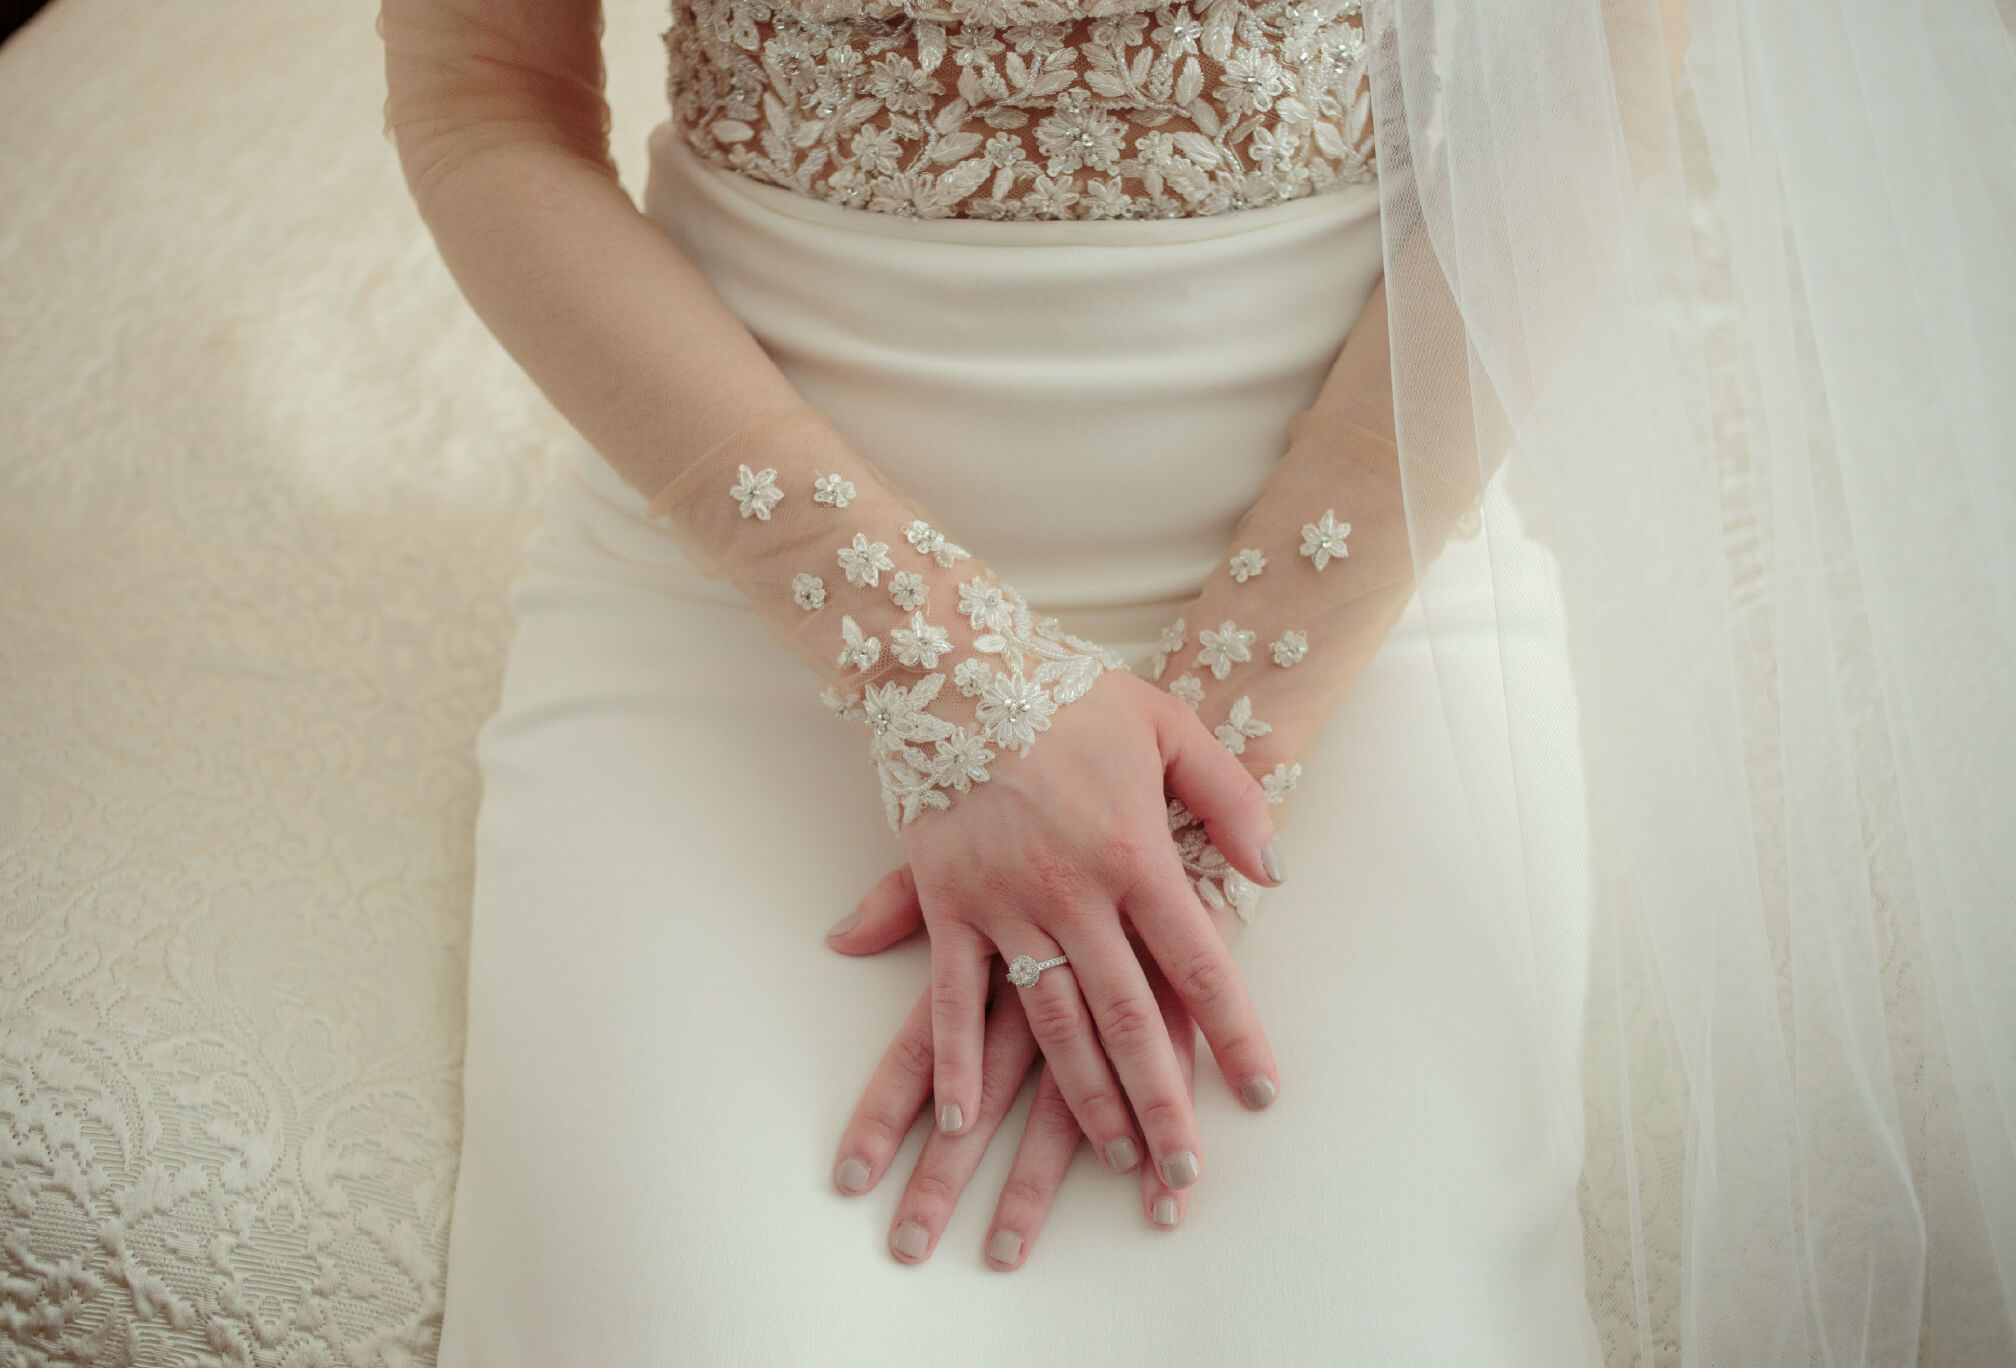 long sleeve lace dress